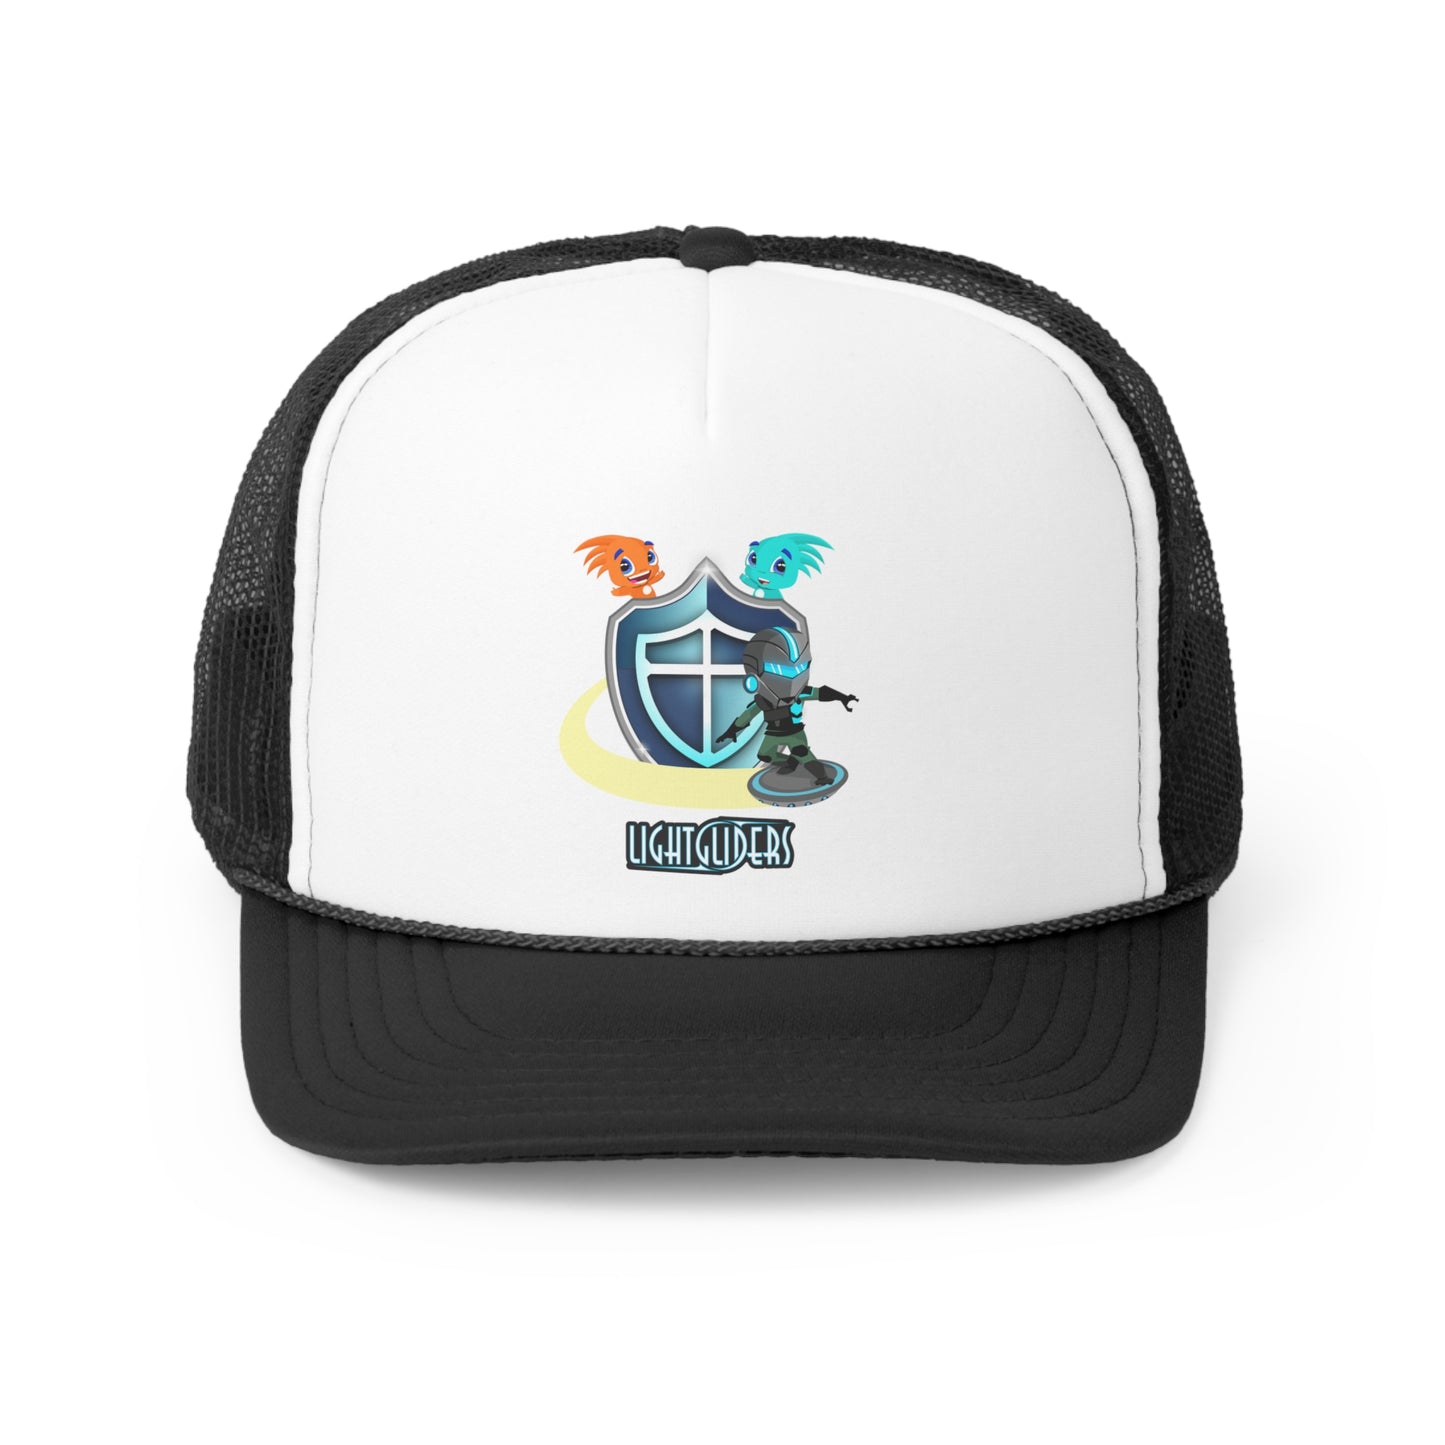 Lightgliders Trucker Hat